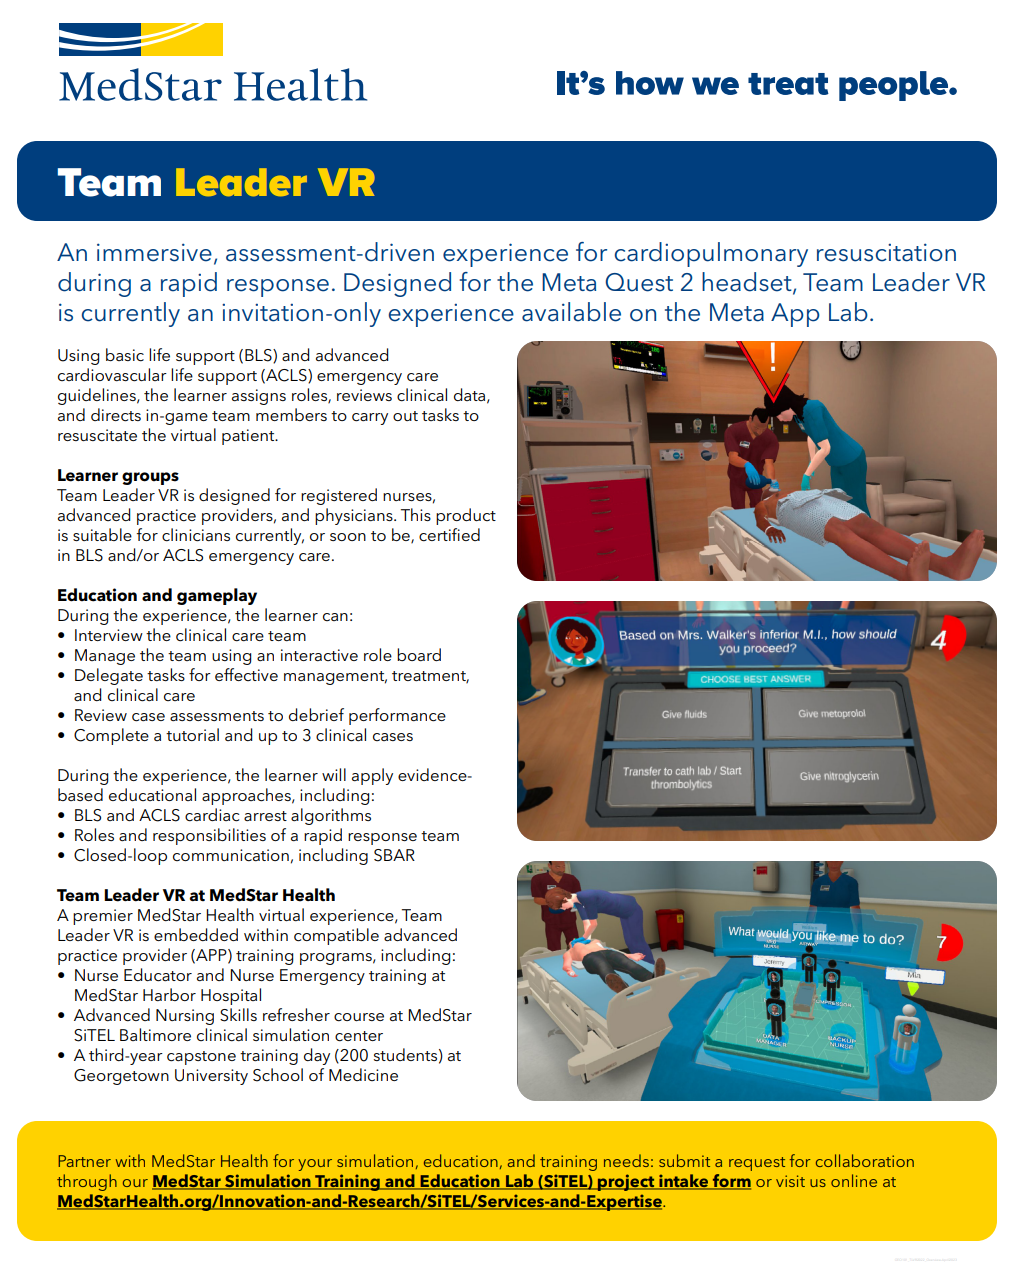 Team Leader VR